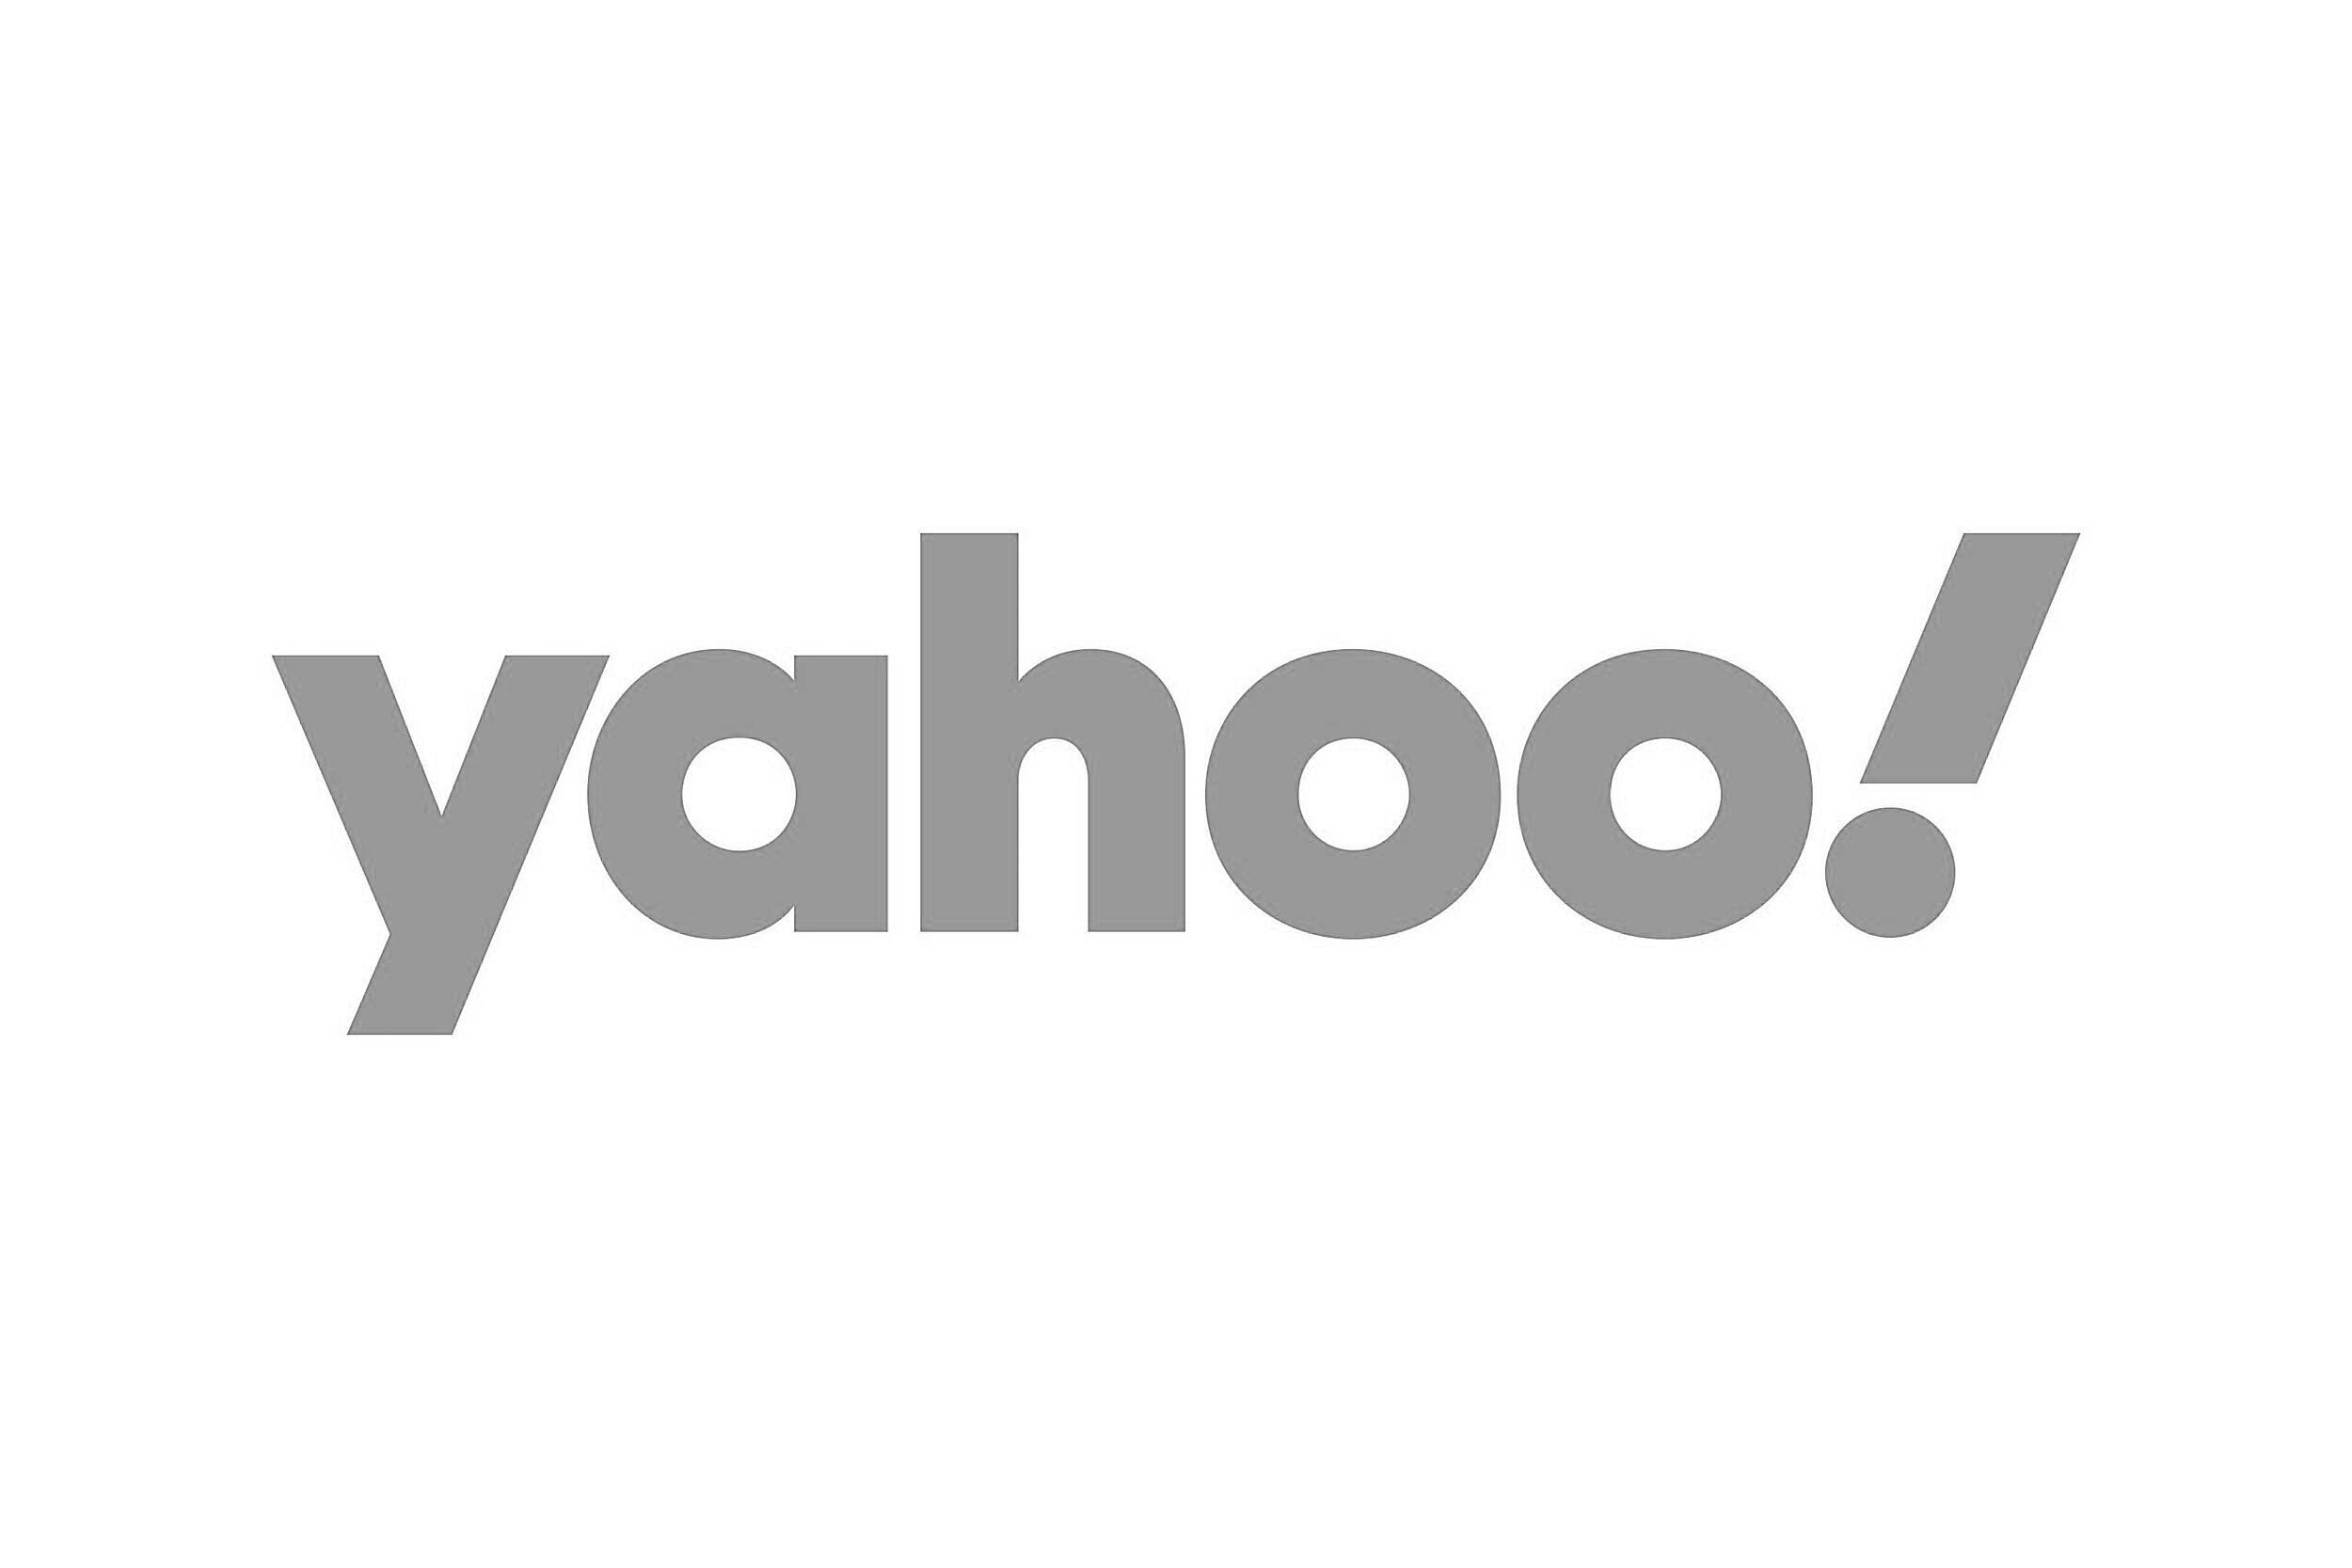 Yahoo-logo.jpg